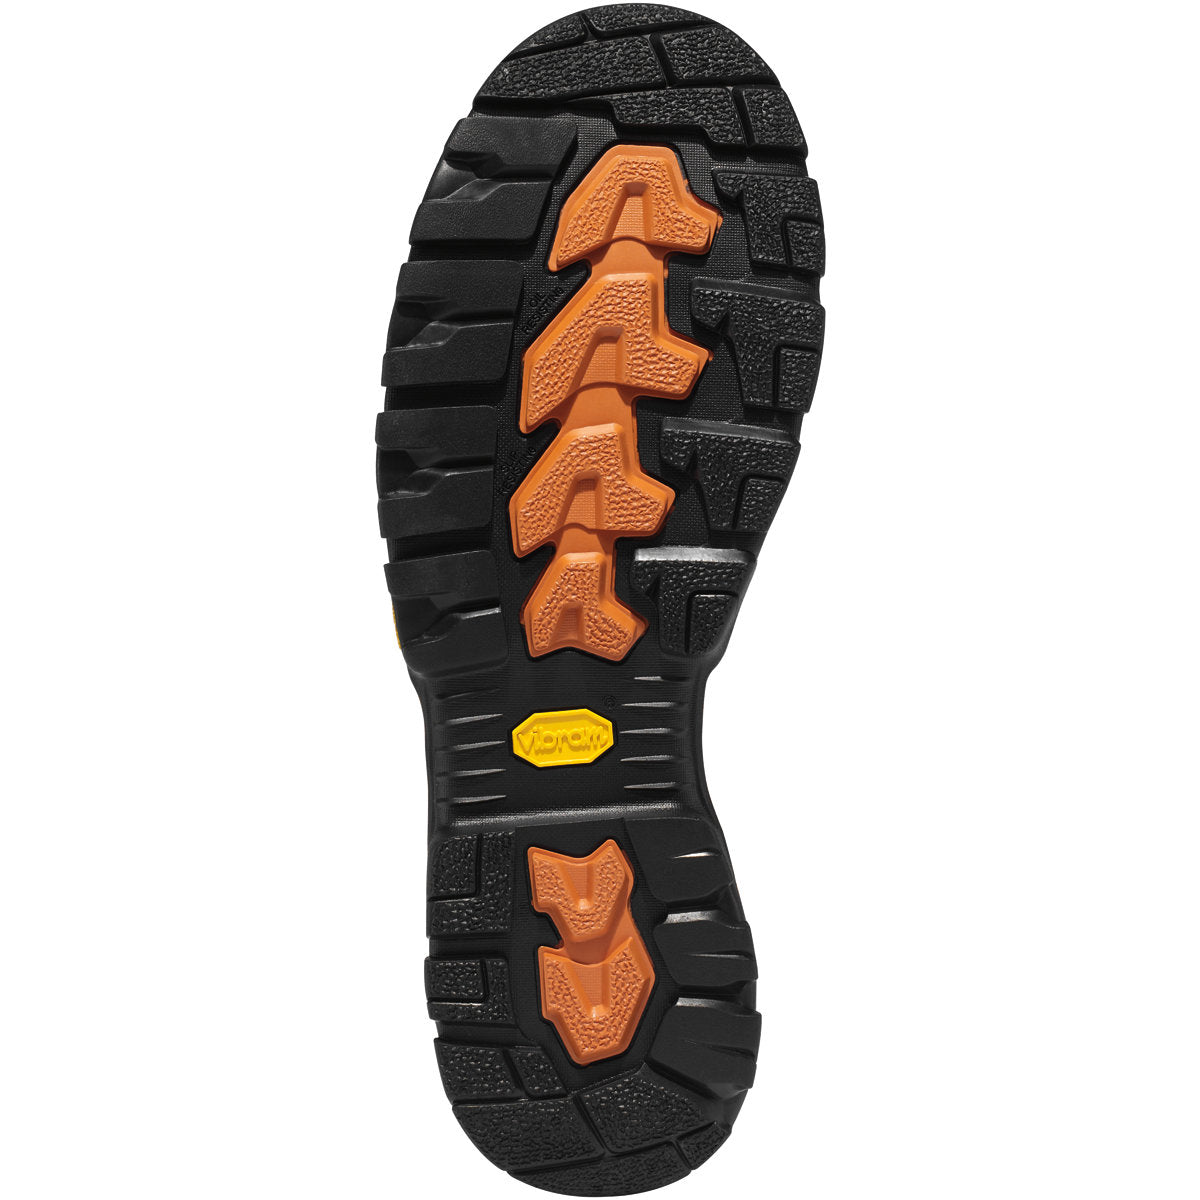 Danner Men's Vicious 4.5-inch Composite Toe